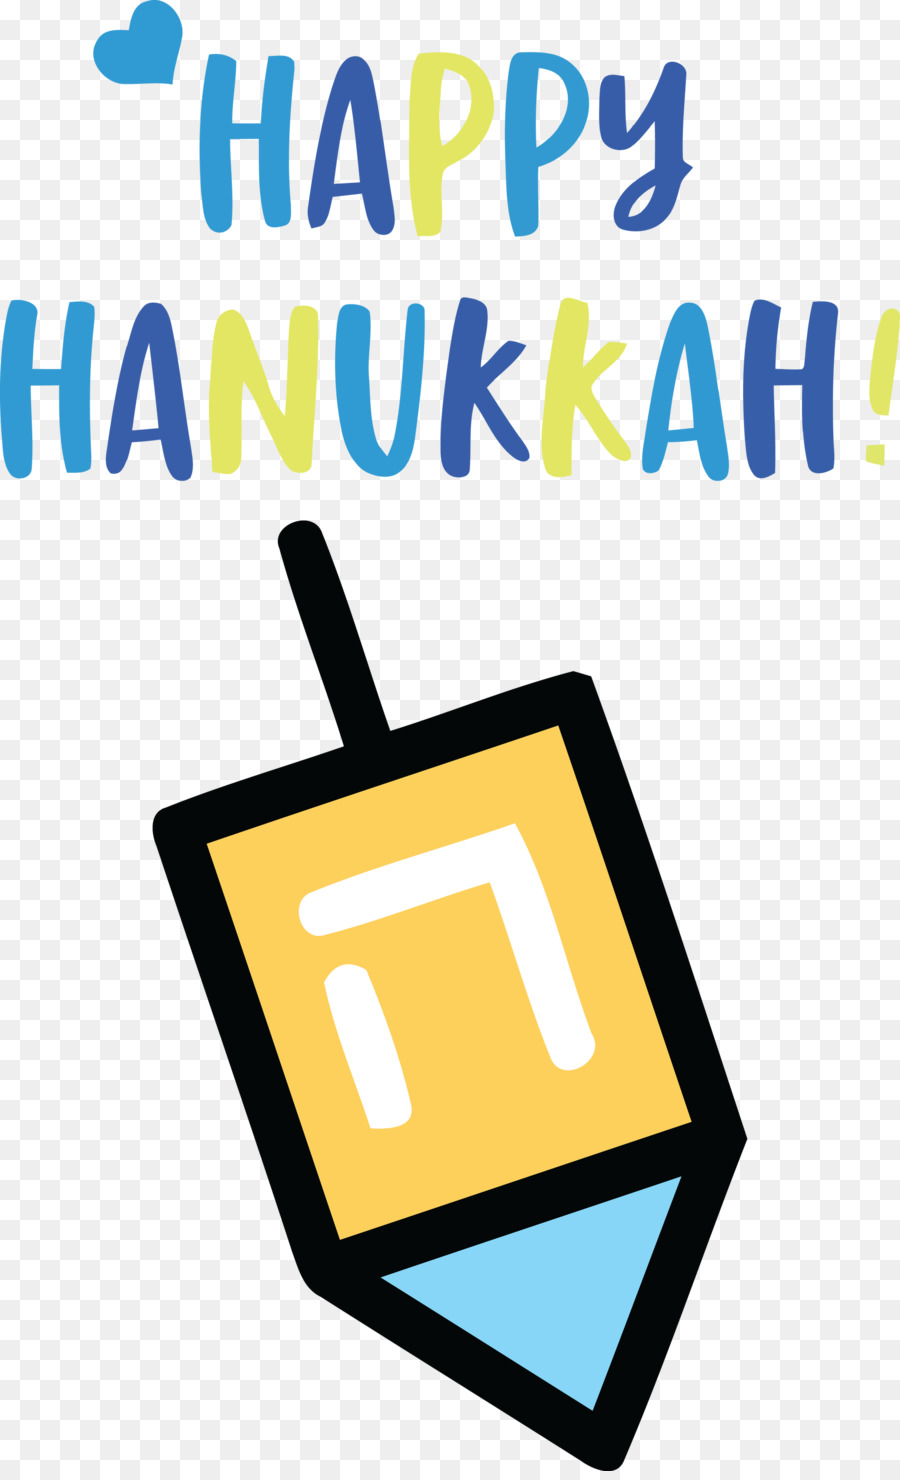 Happy Hanukkah Hanukkah Jewish festival